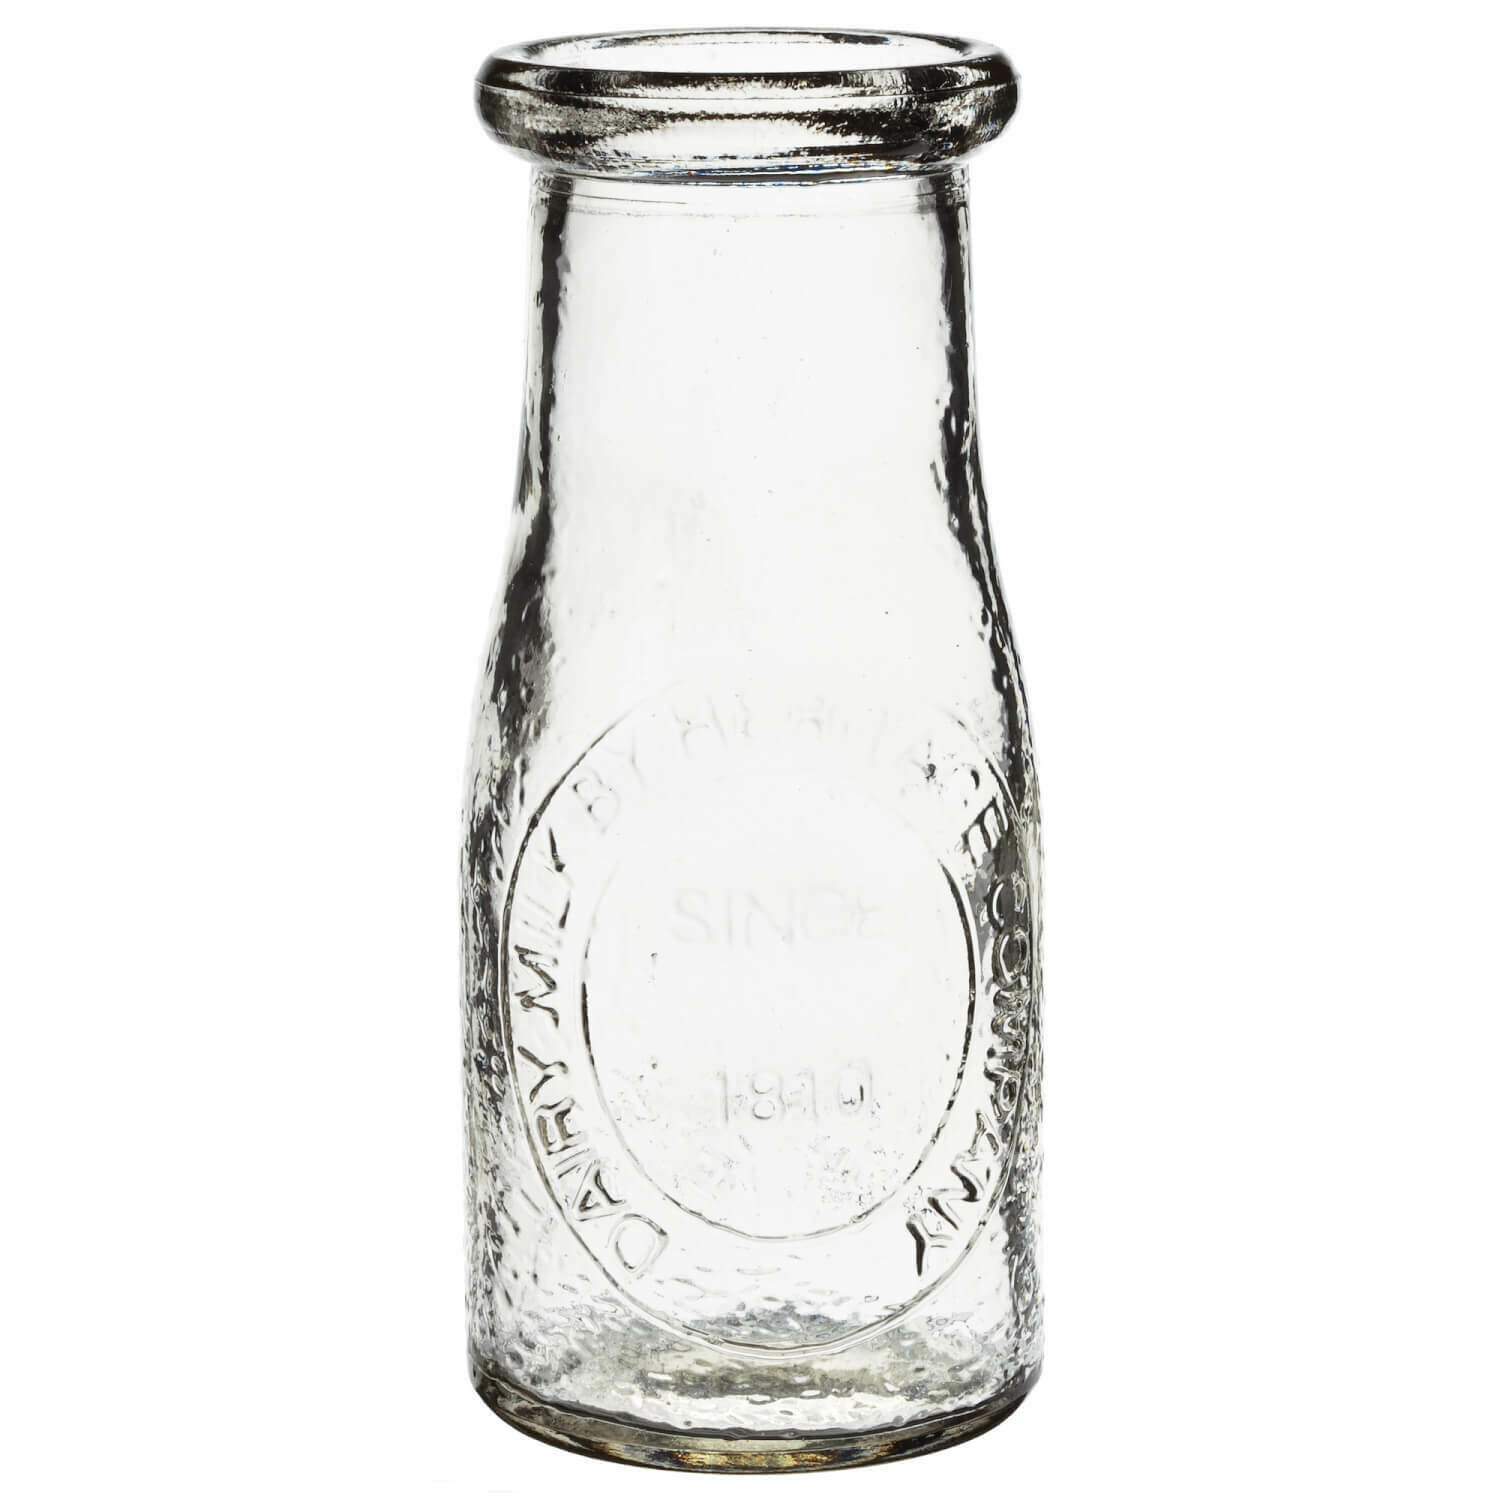 Milk Bottle Vase - clear